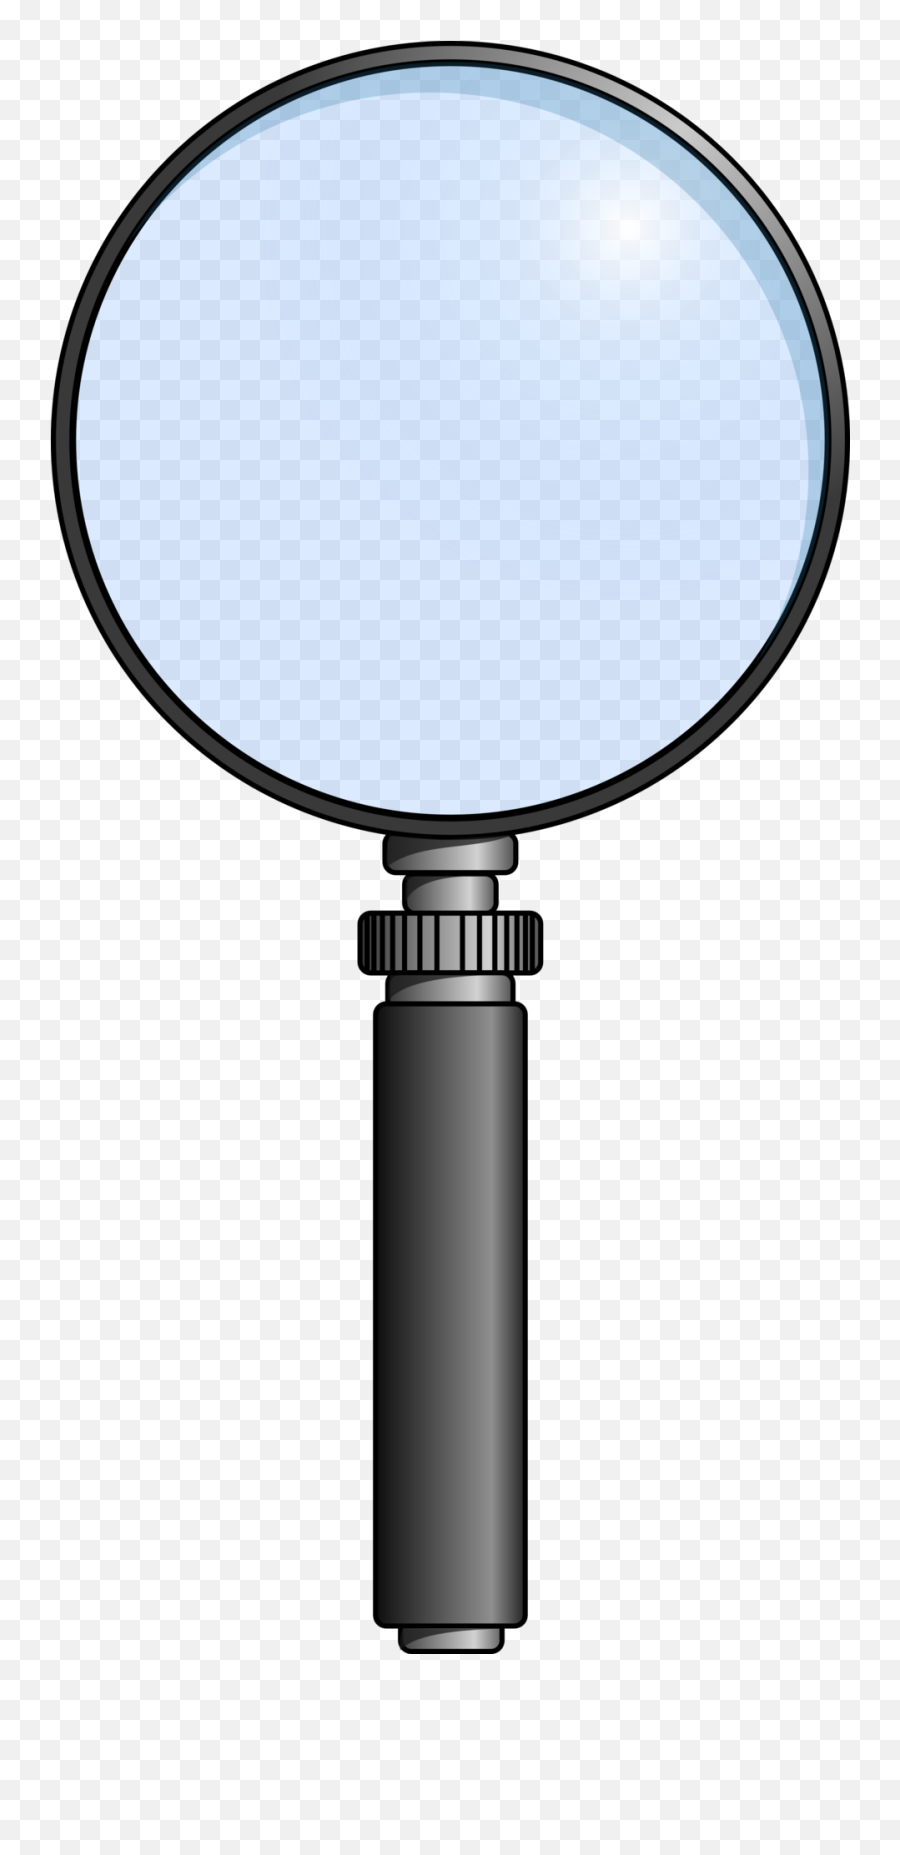 Public Domain Clip Art Image - Magnifying Glass Vertical Transparent Background Emoji,Emoji Magnifying Glass Tv